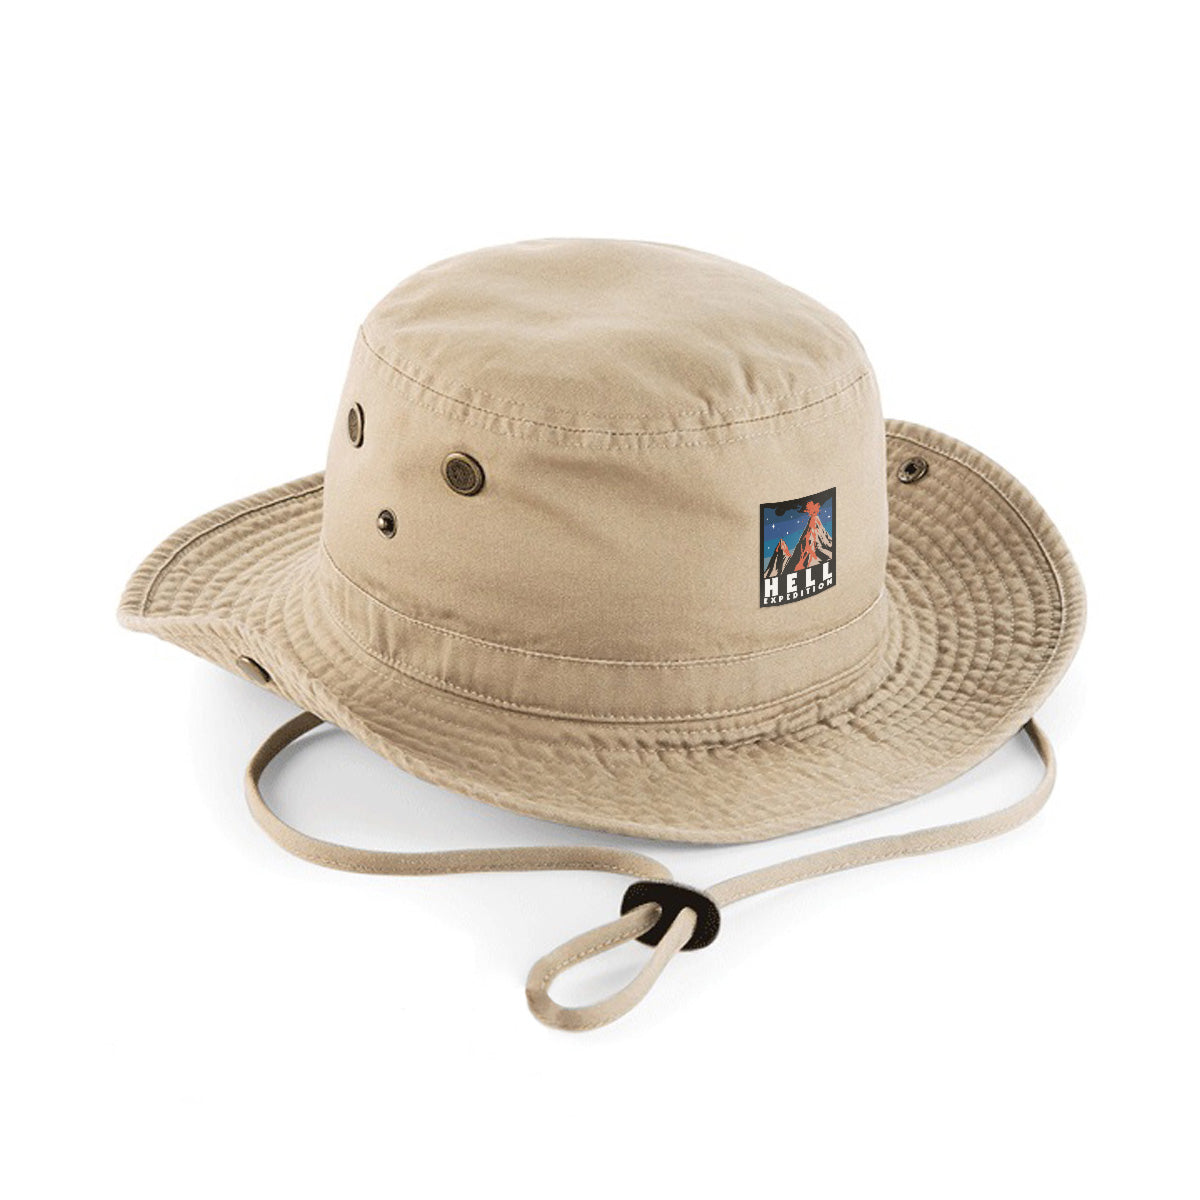 Expedition Explorer Hat